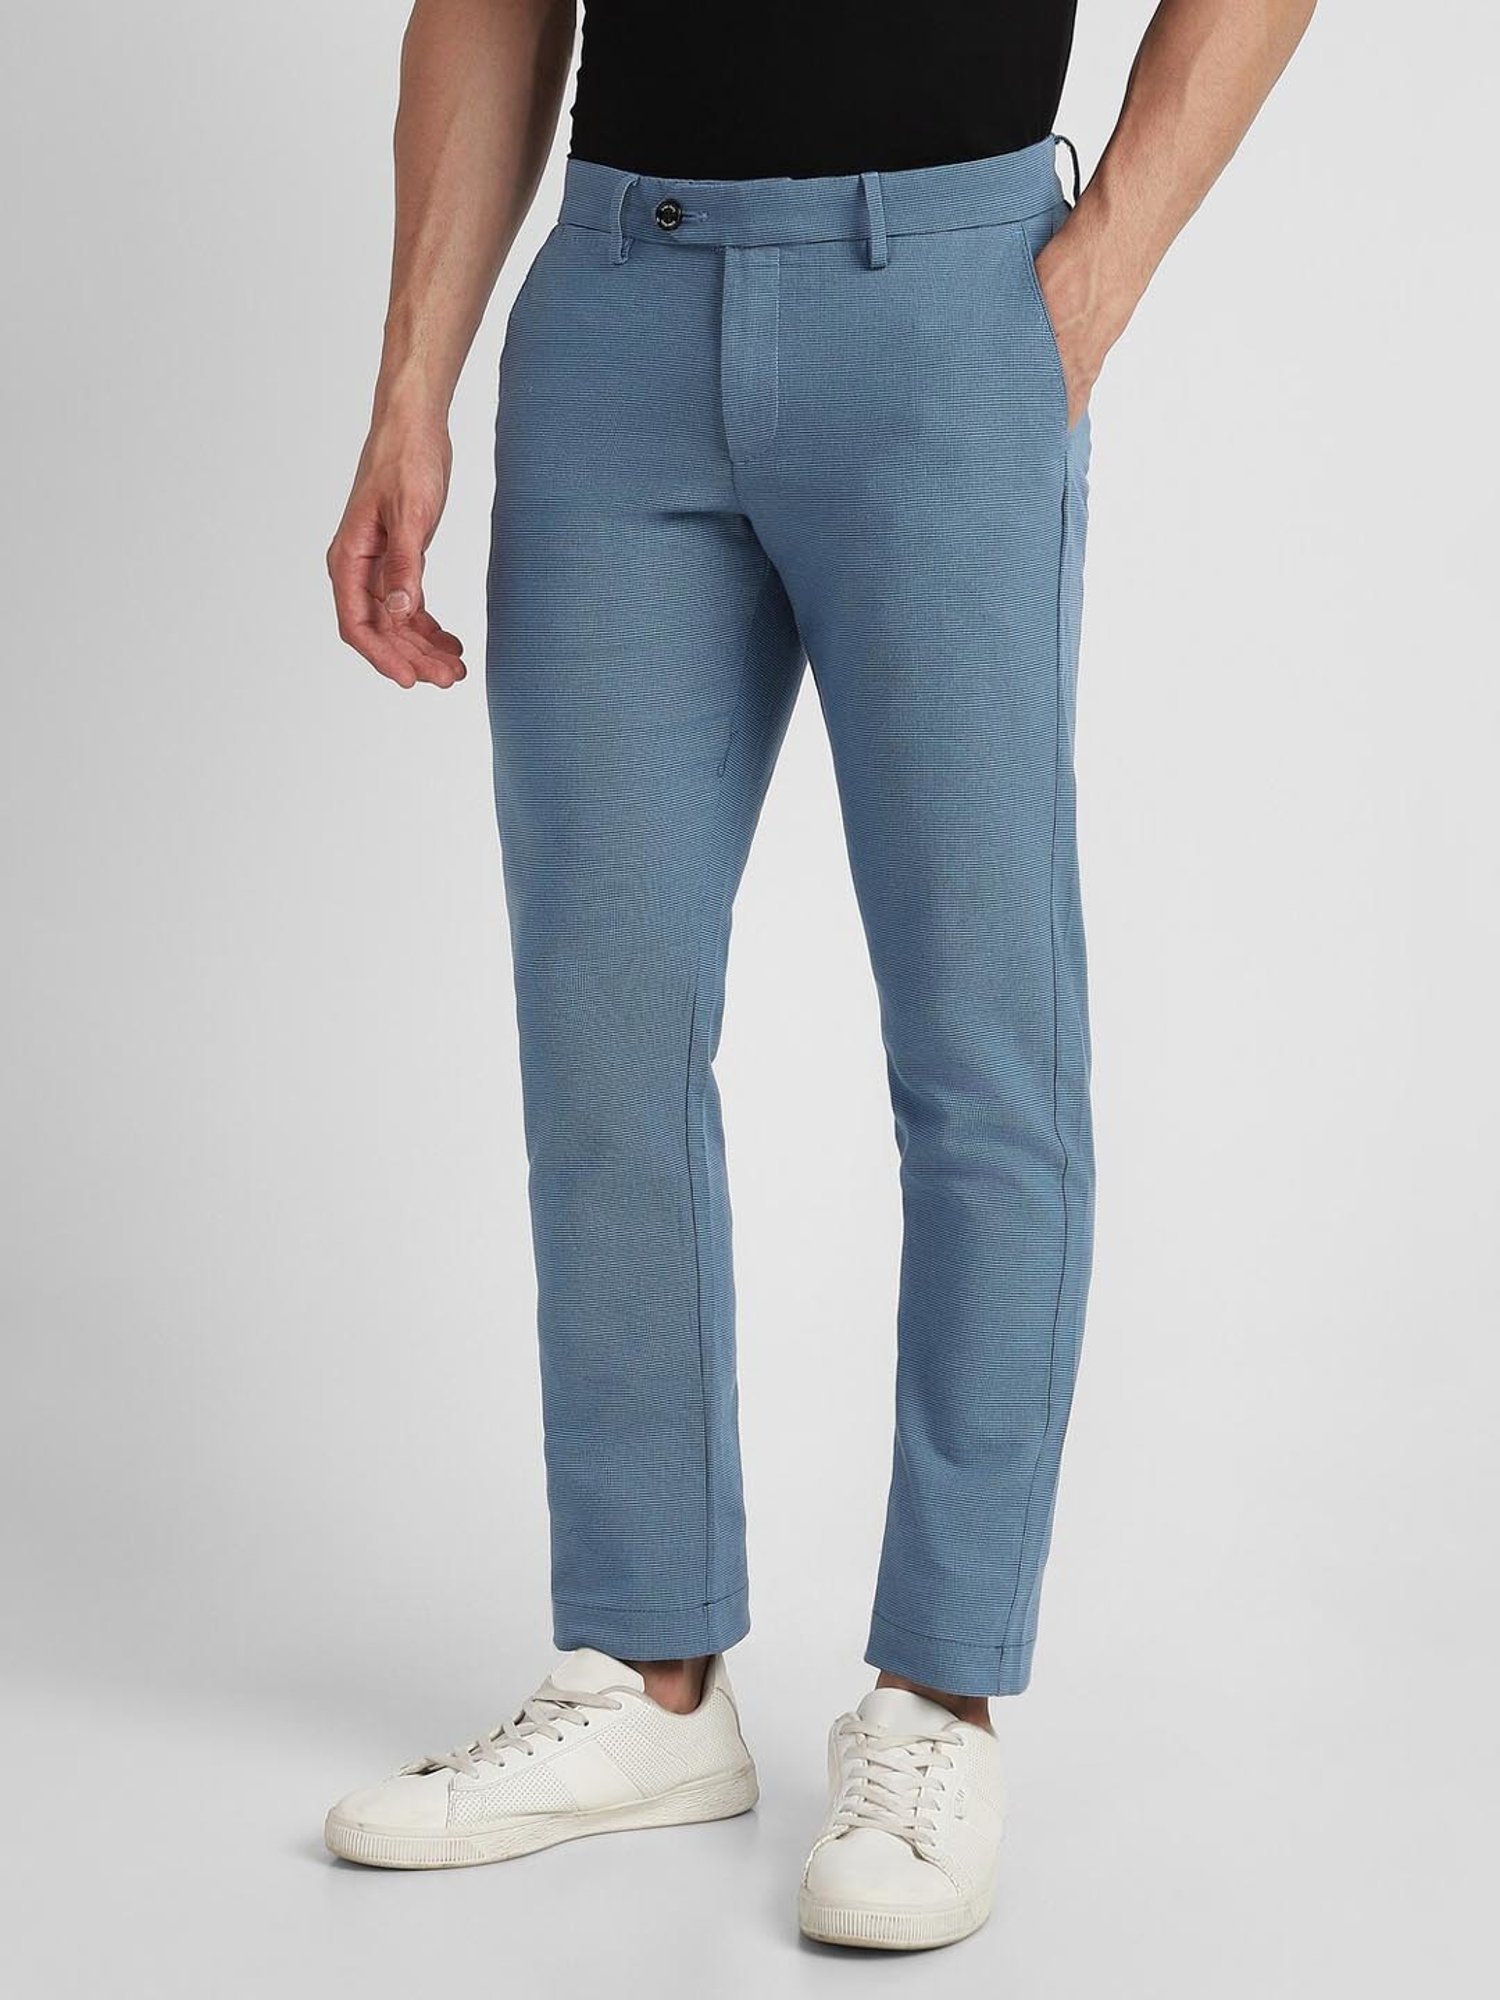 Sixth Element cotton fabric sky blue trouser - G3-MCT0508 | G3fashion.com